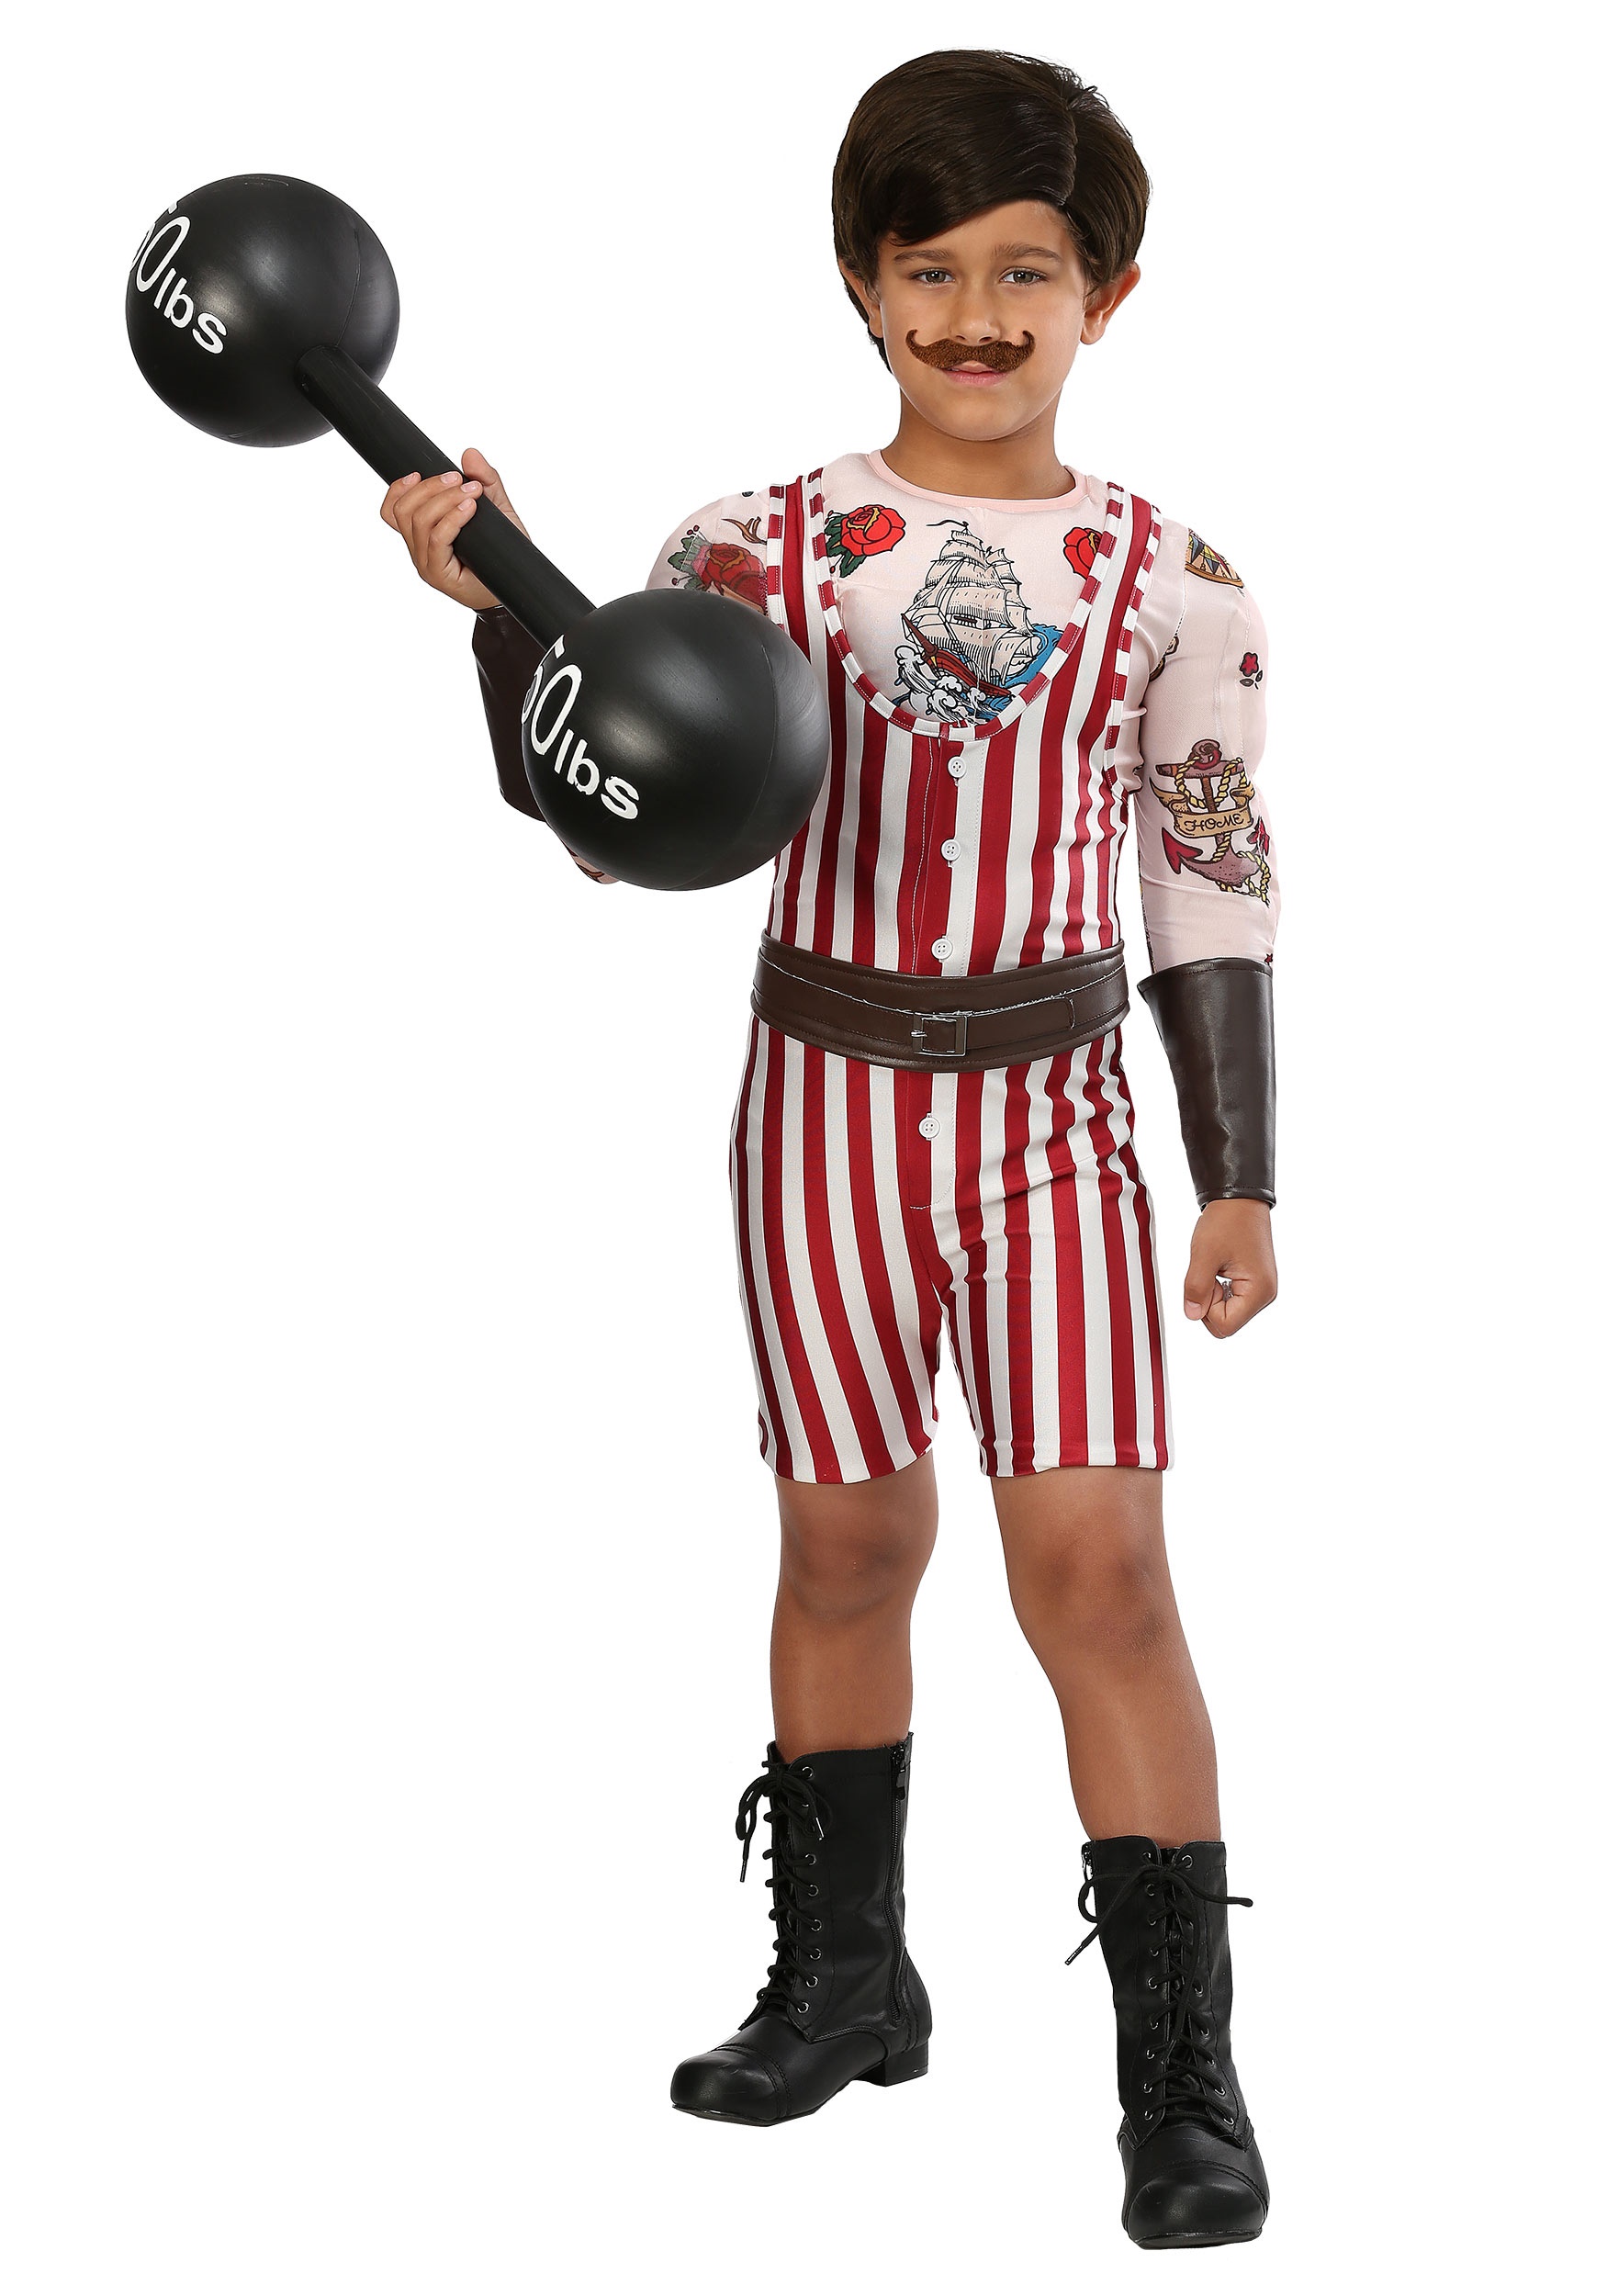 10+ Circus strongman costume diy ideas in 2022 